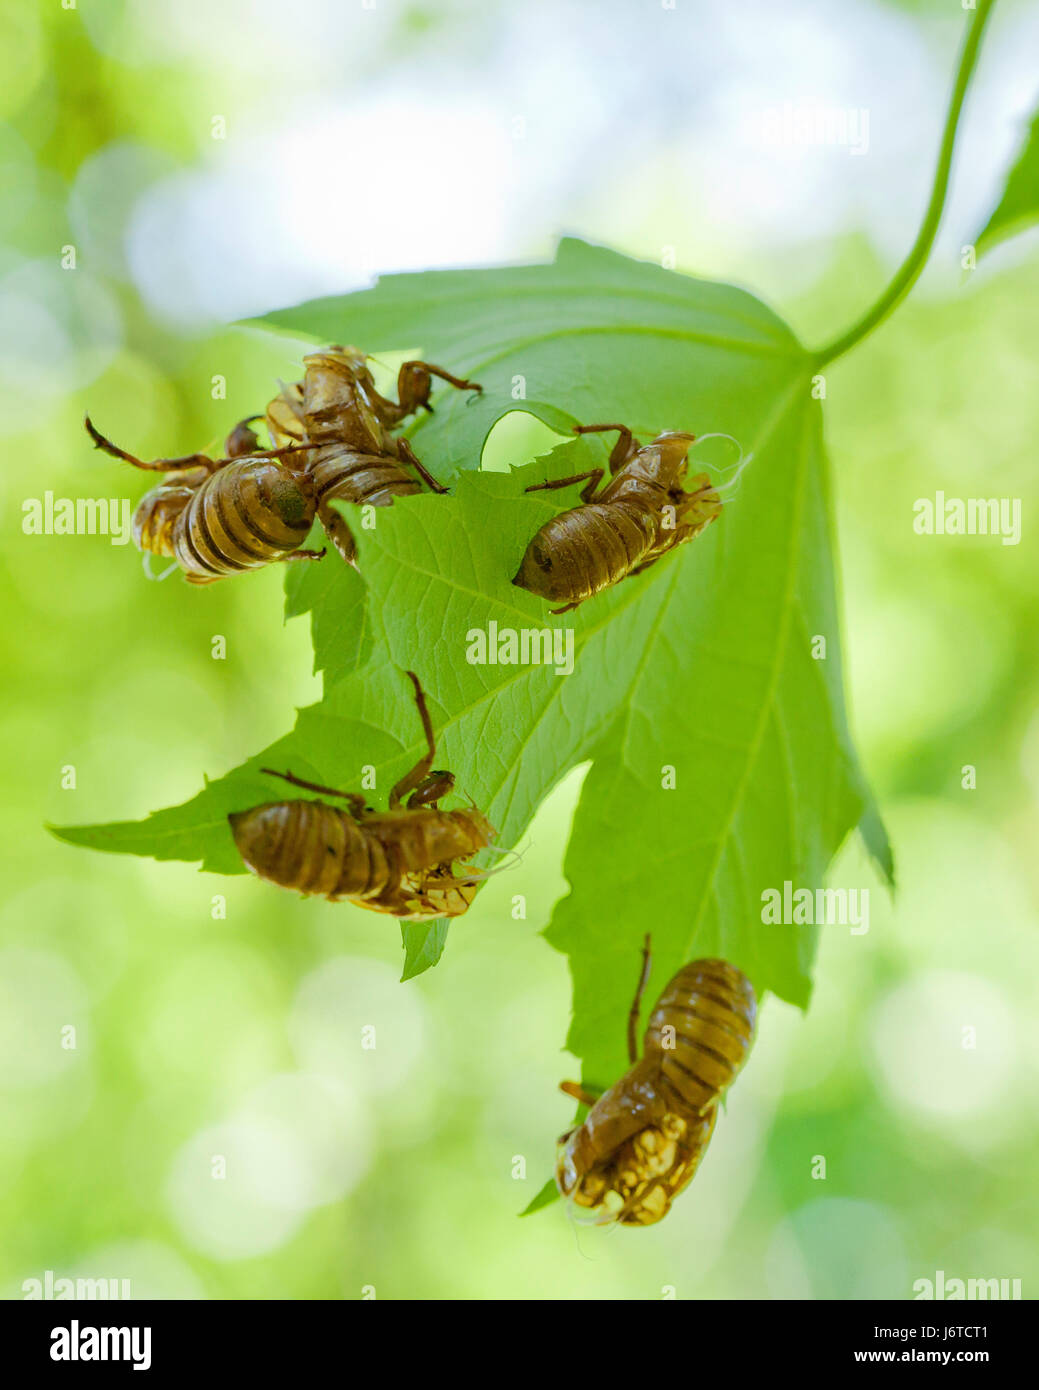 Brood X cicada (Magicicada) exoskeletons on leaf / cicada shells - Virginia USA Stock Photo